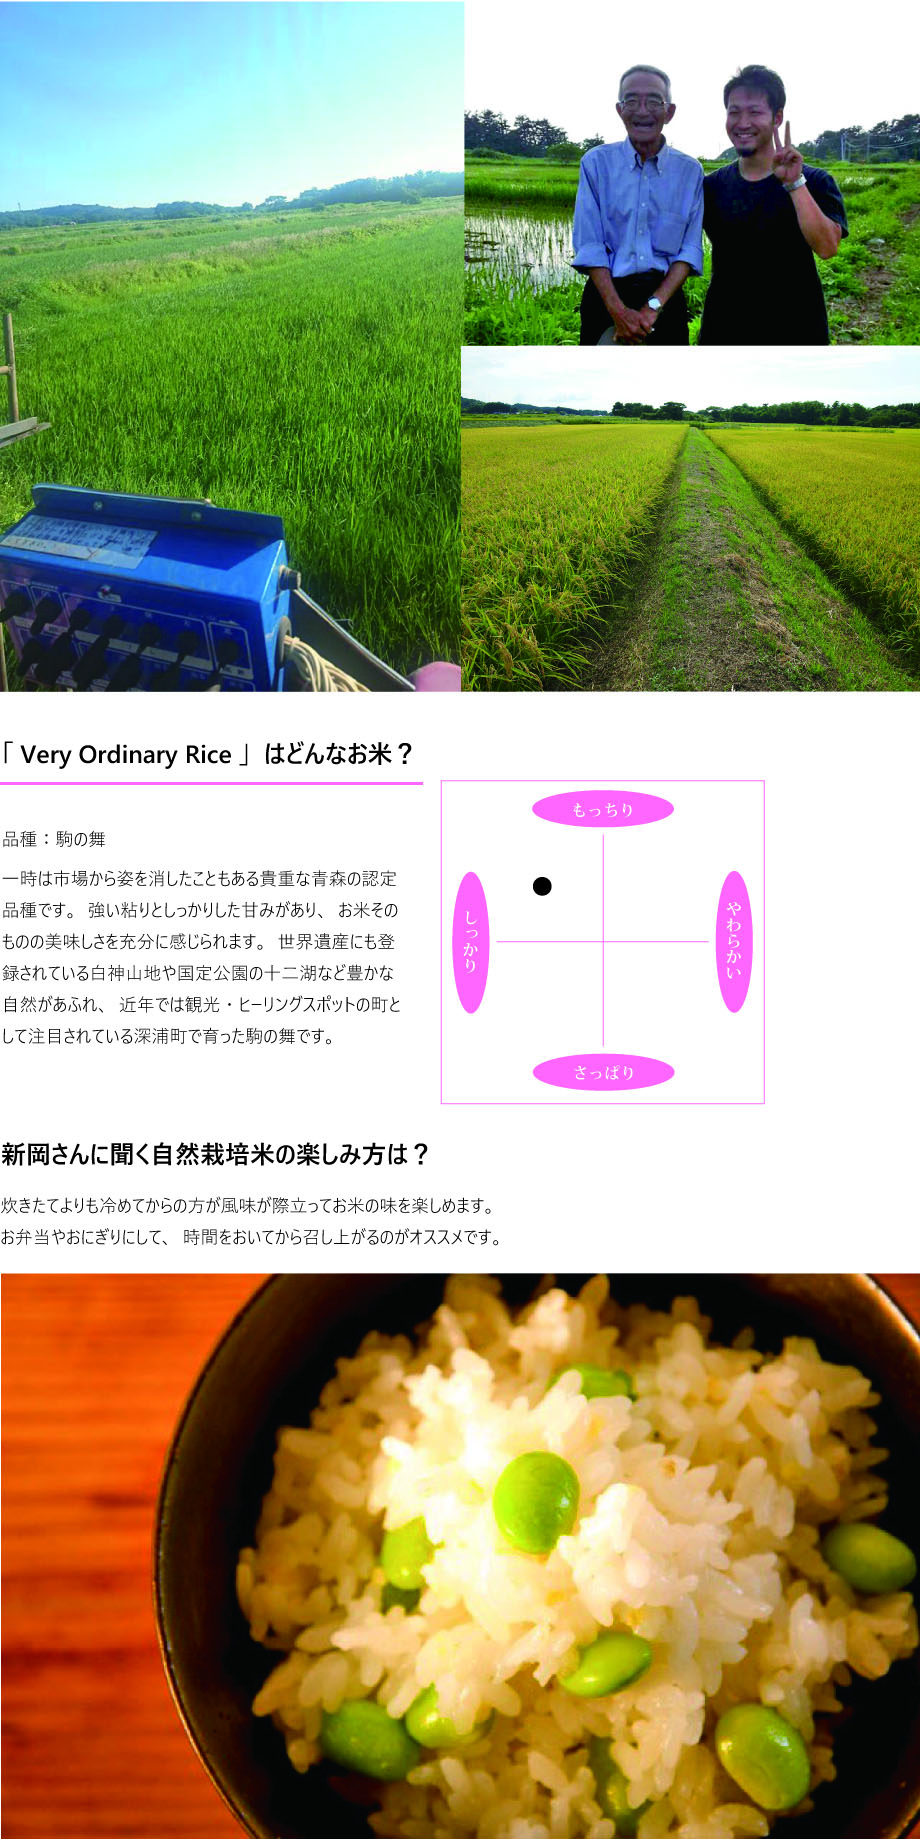 (R03産)Very Ordinary Rice白米1kg